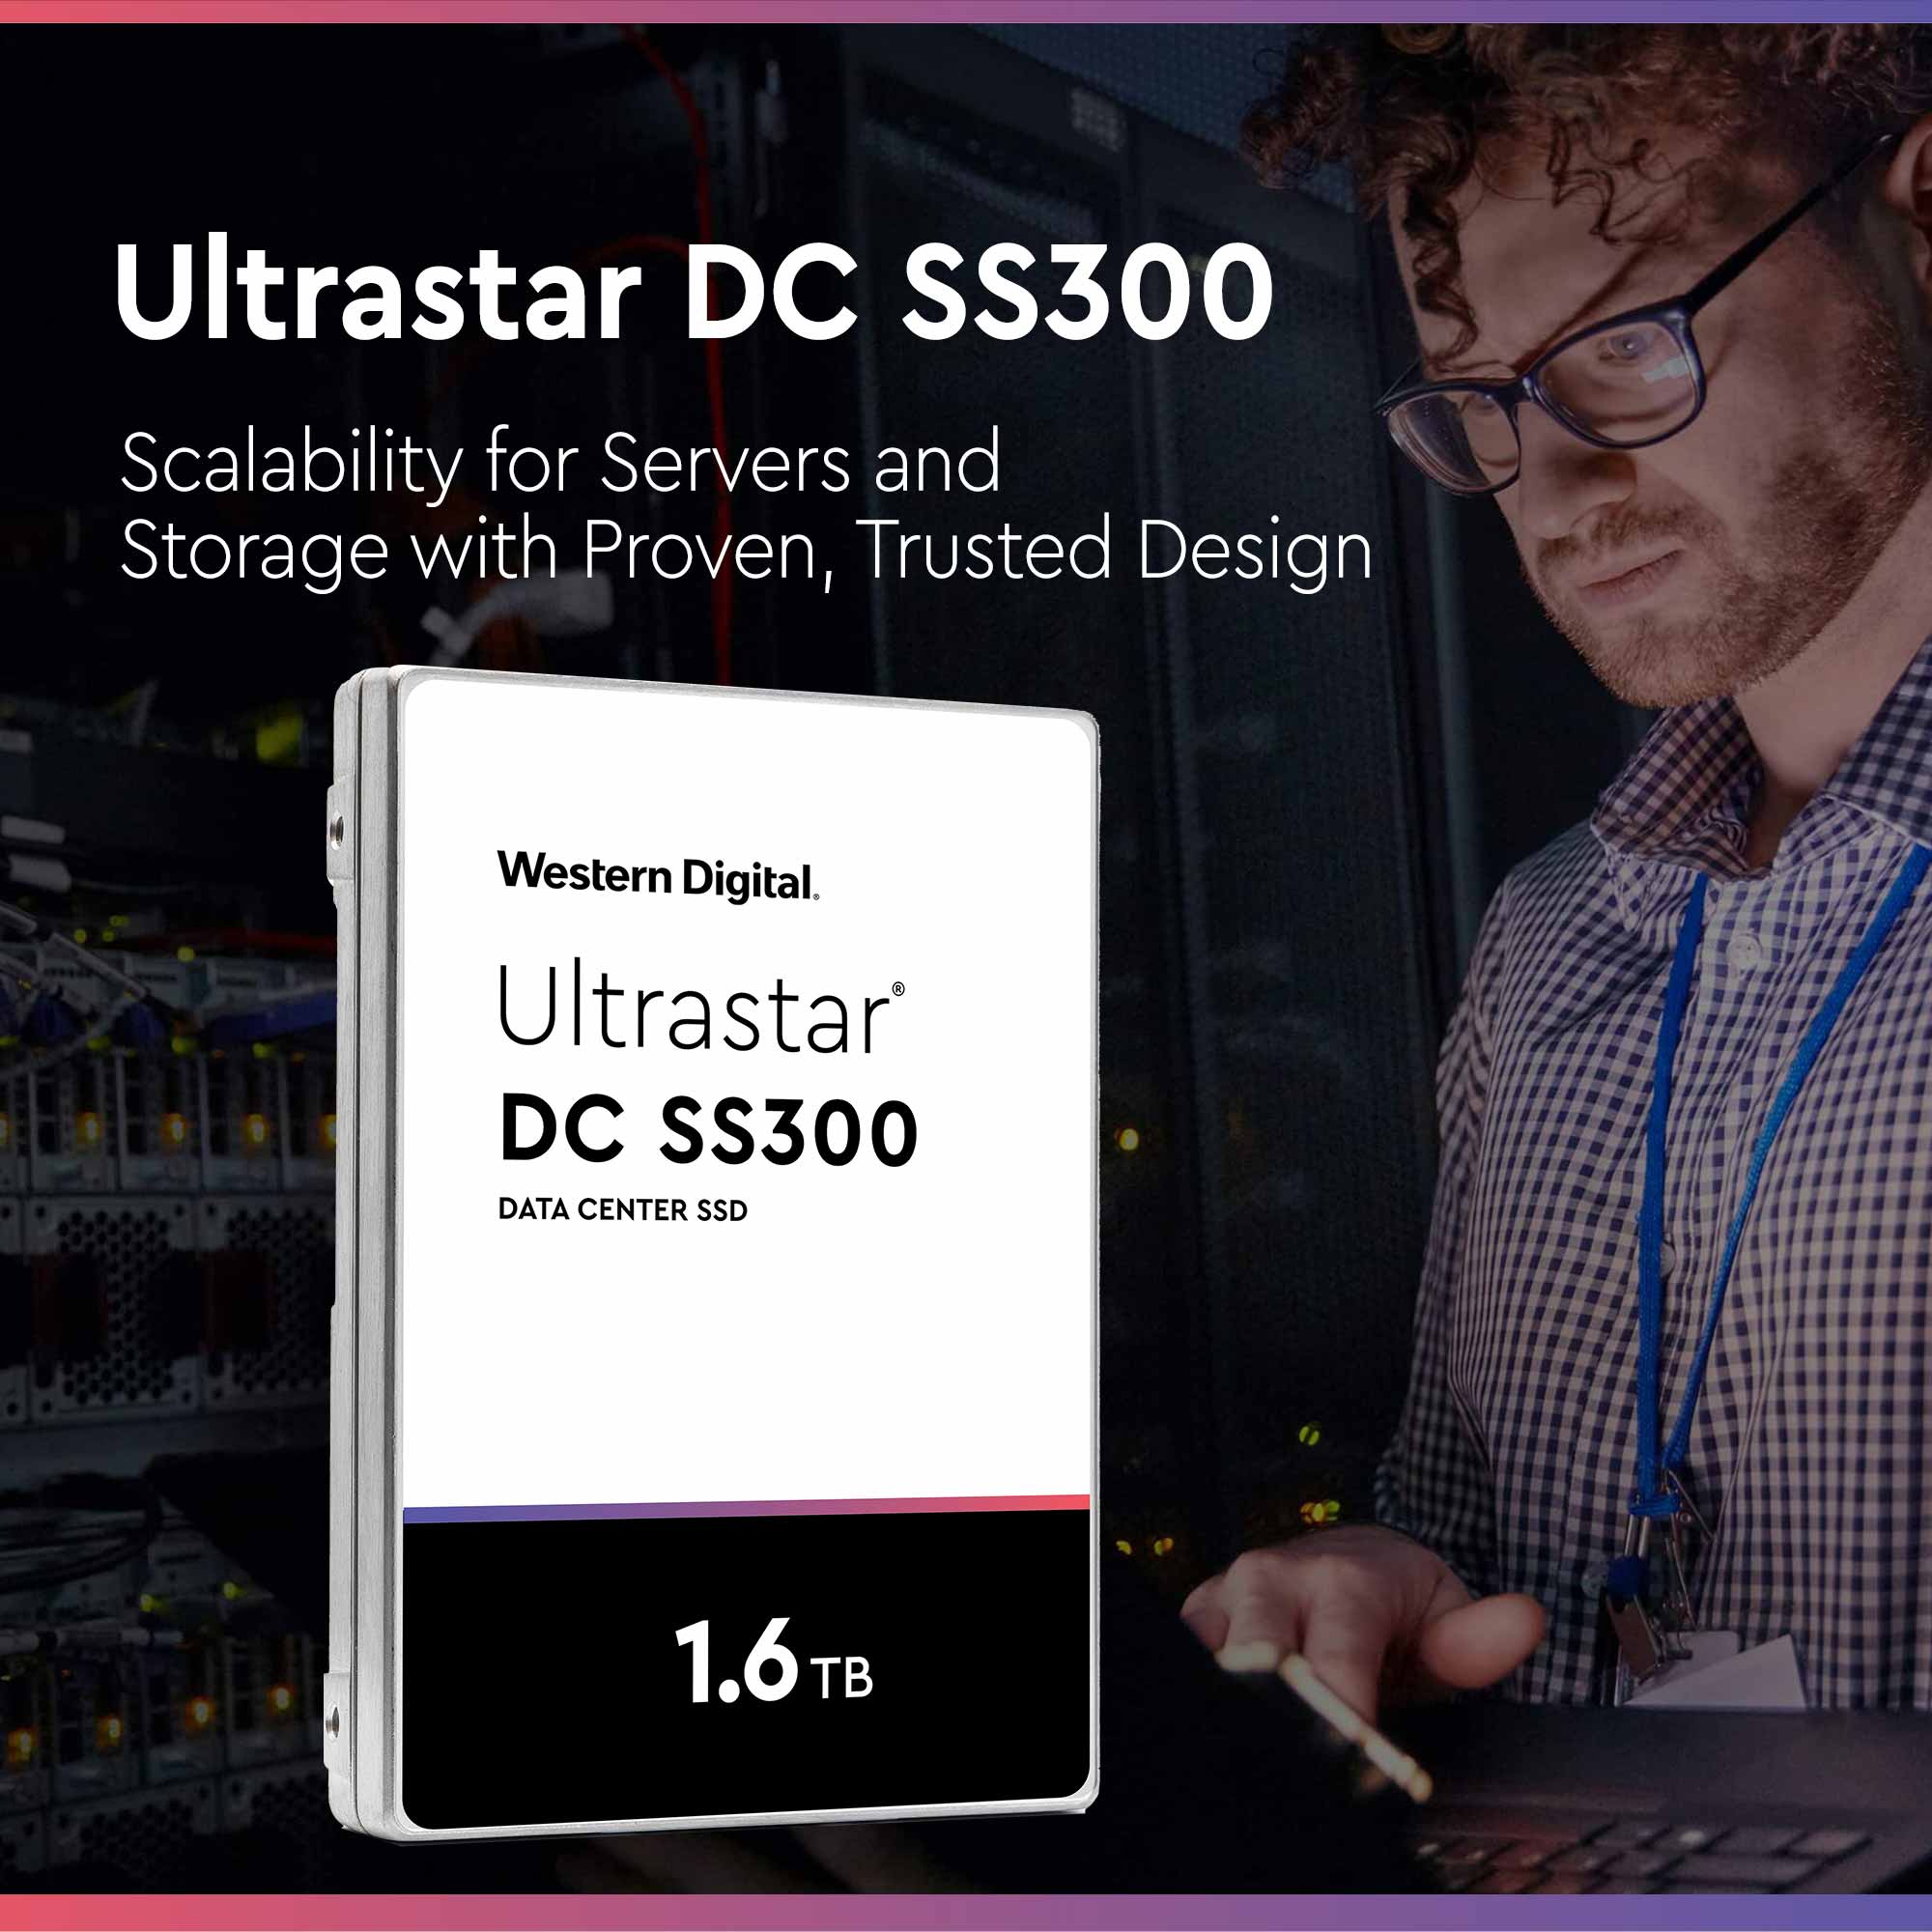 Western Digital DC SS300 HUSMM3216ASS204 1.6TB SAS 12Gb/s 512e 2.5in Recertified Solid State Drive - Ultrastar DC SS300